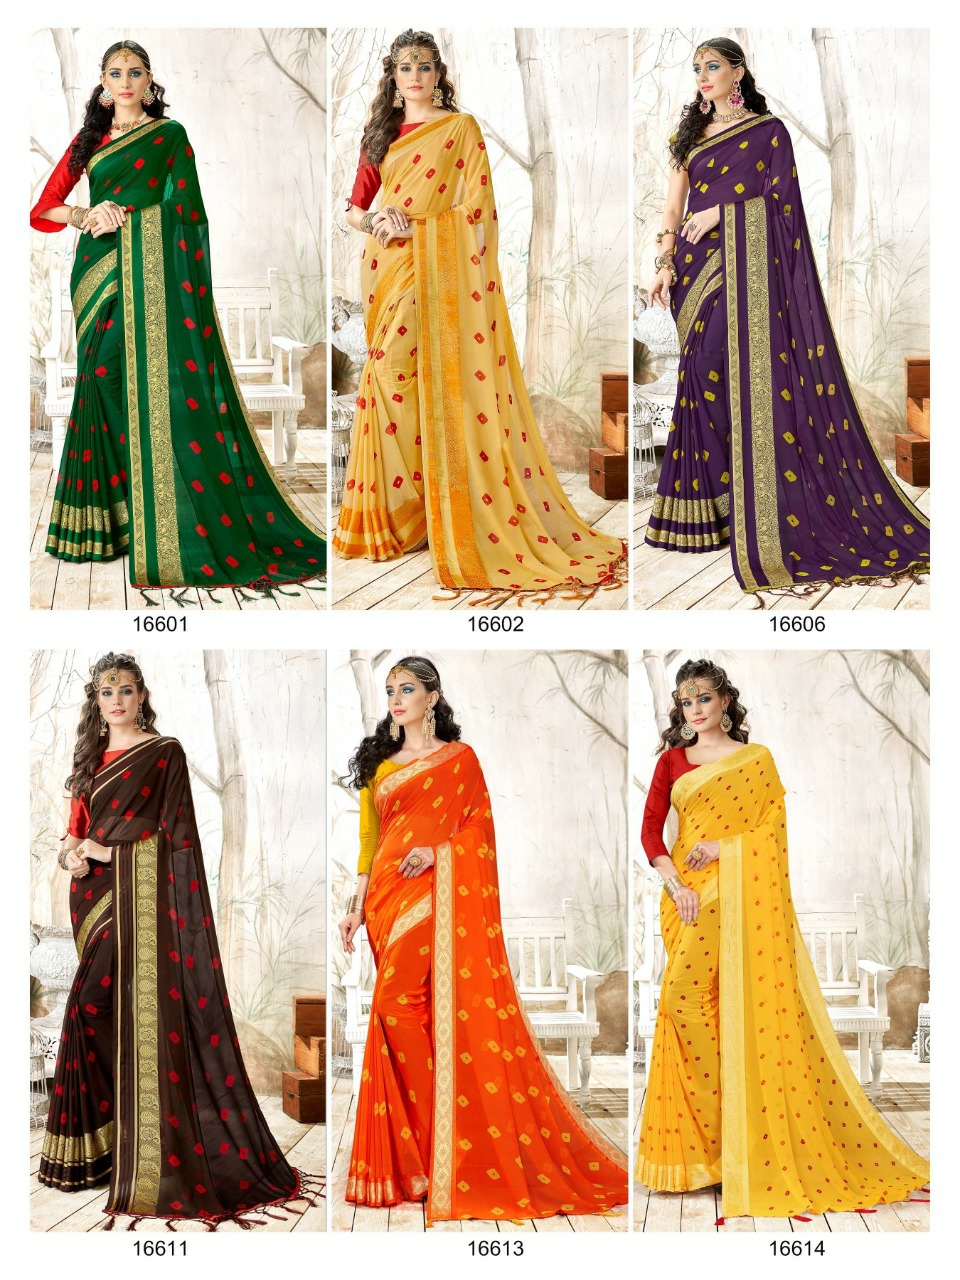 vallabhi prints udipti georgette  gorgeous look saree catalog